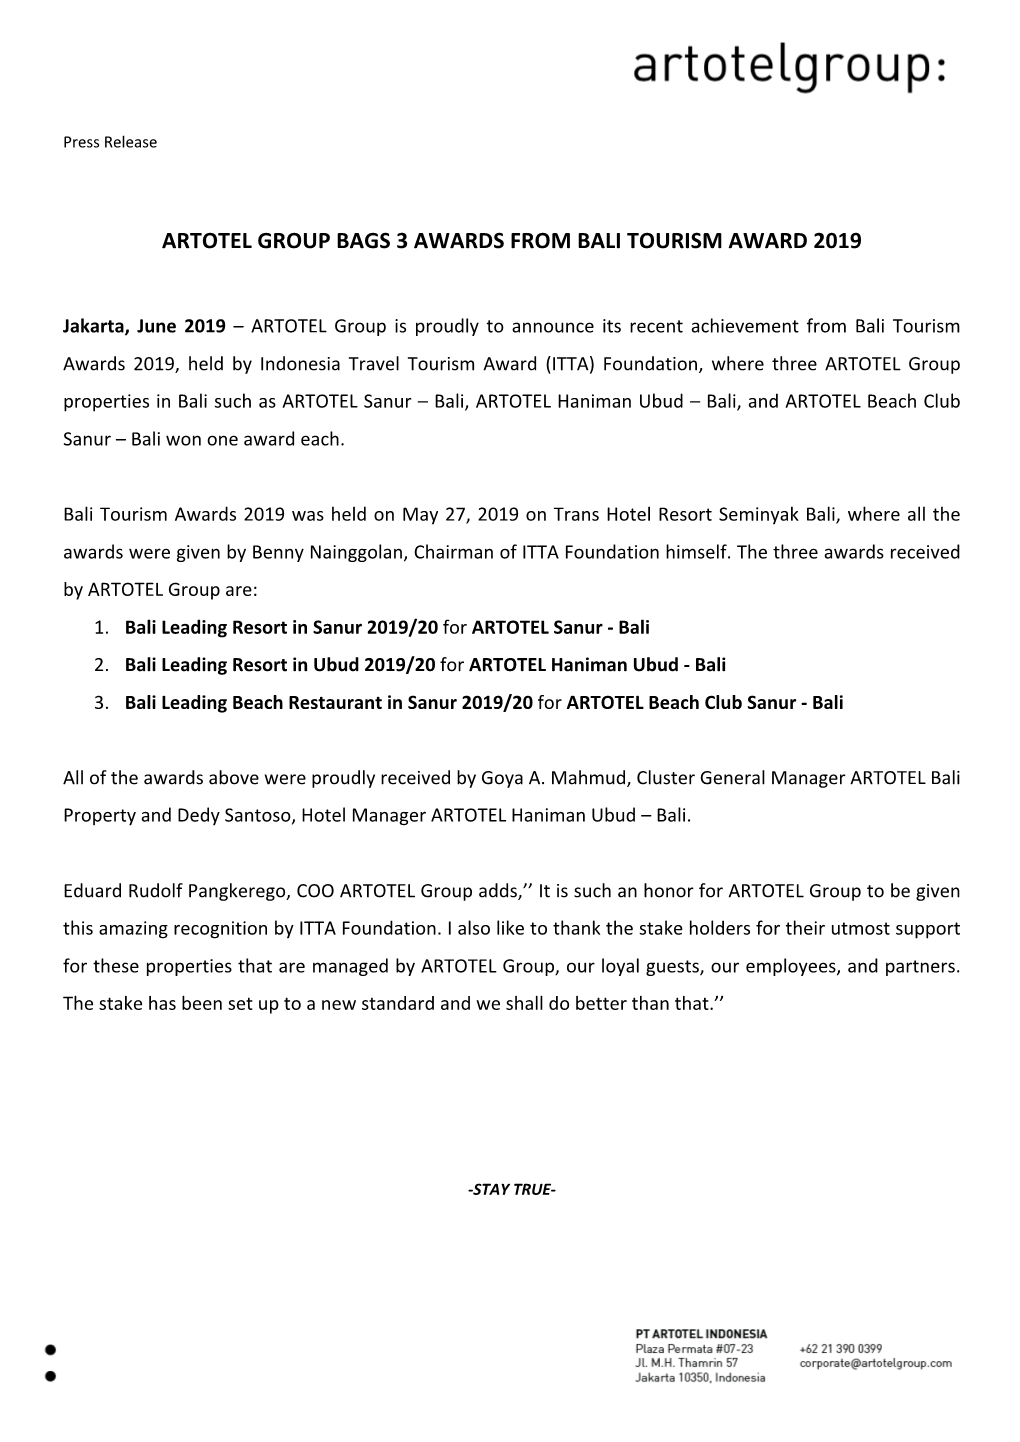 Artotel Group Bags 3 Awards from Bali Tourism Award 2019